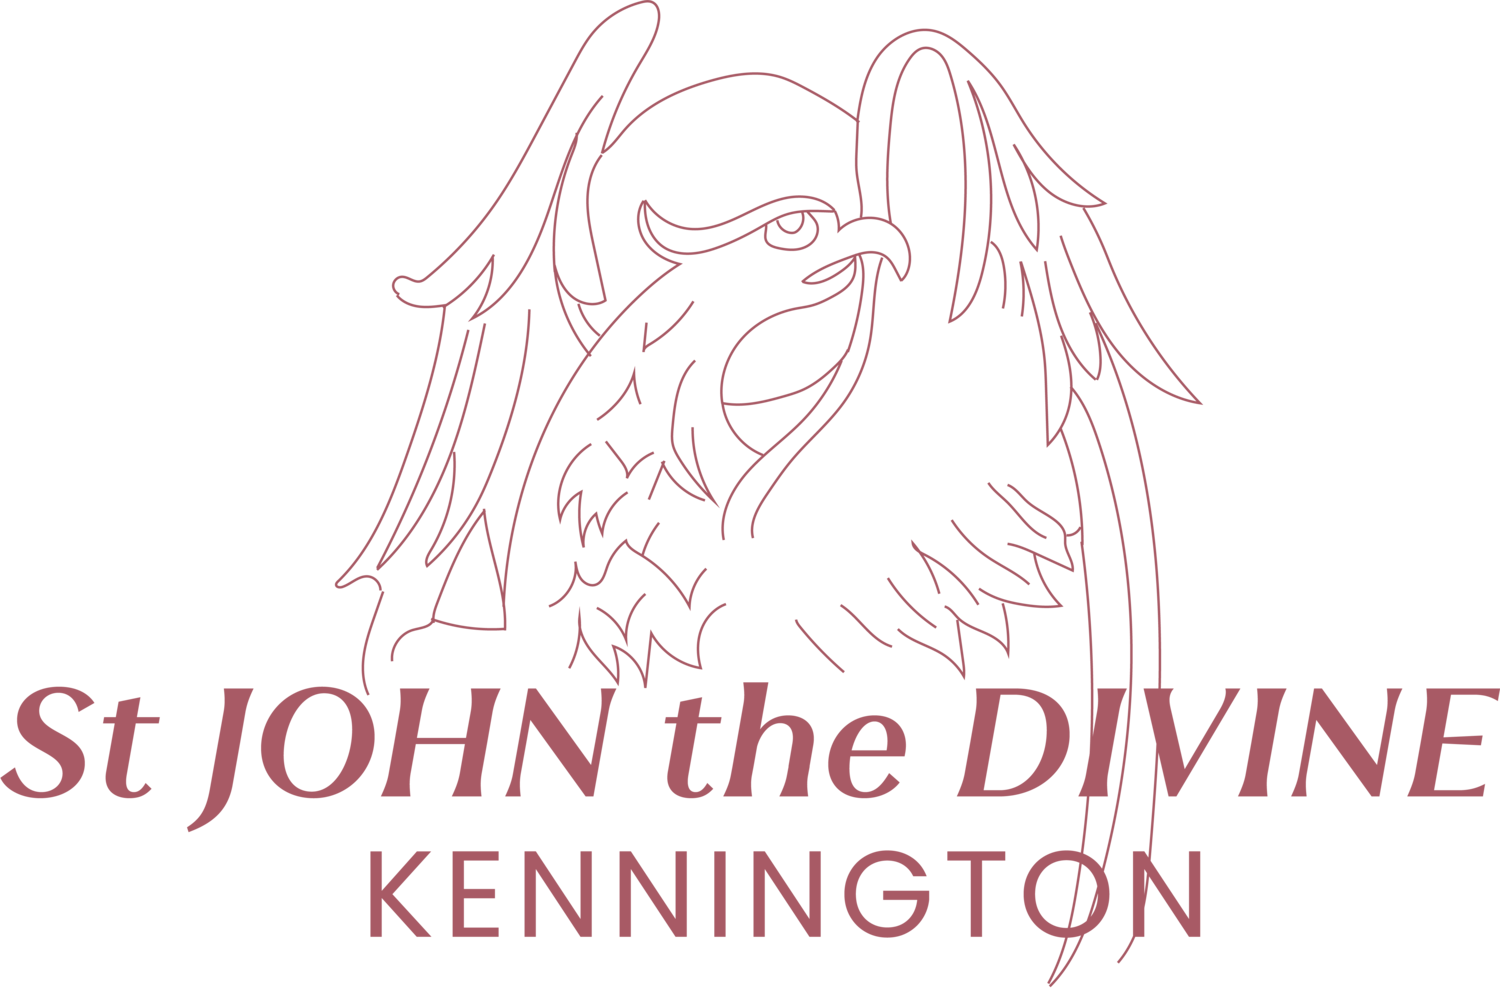 St John the Divine Kennington